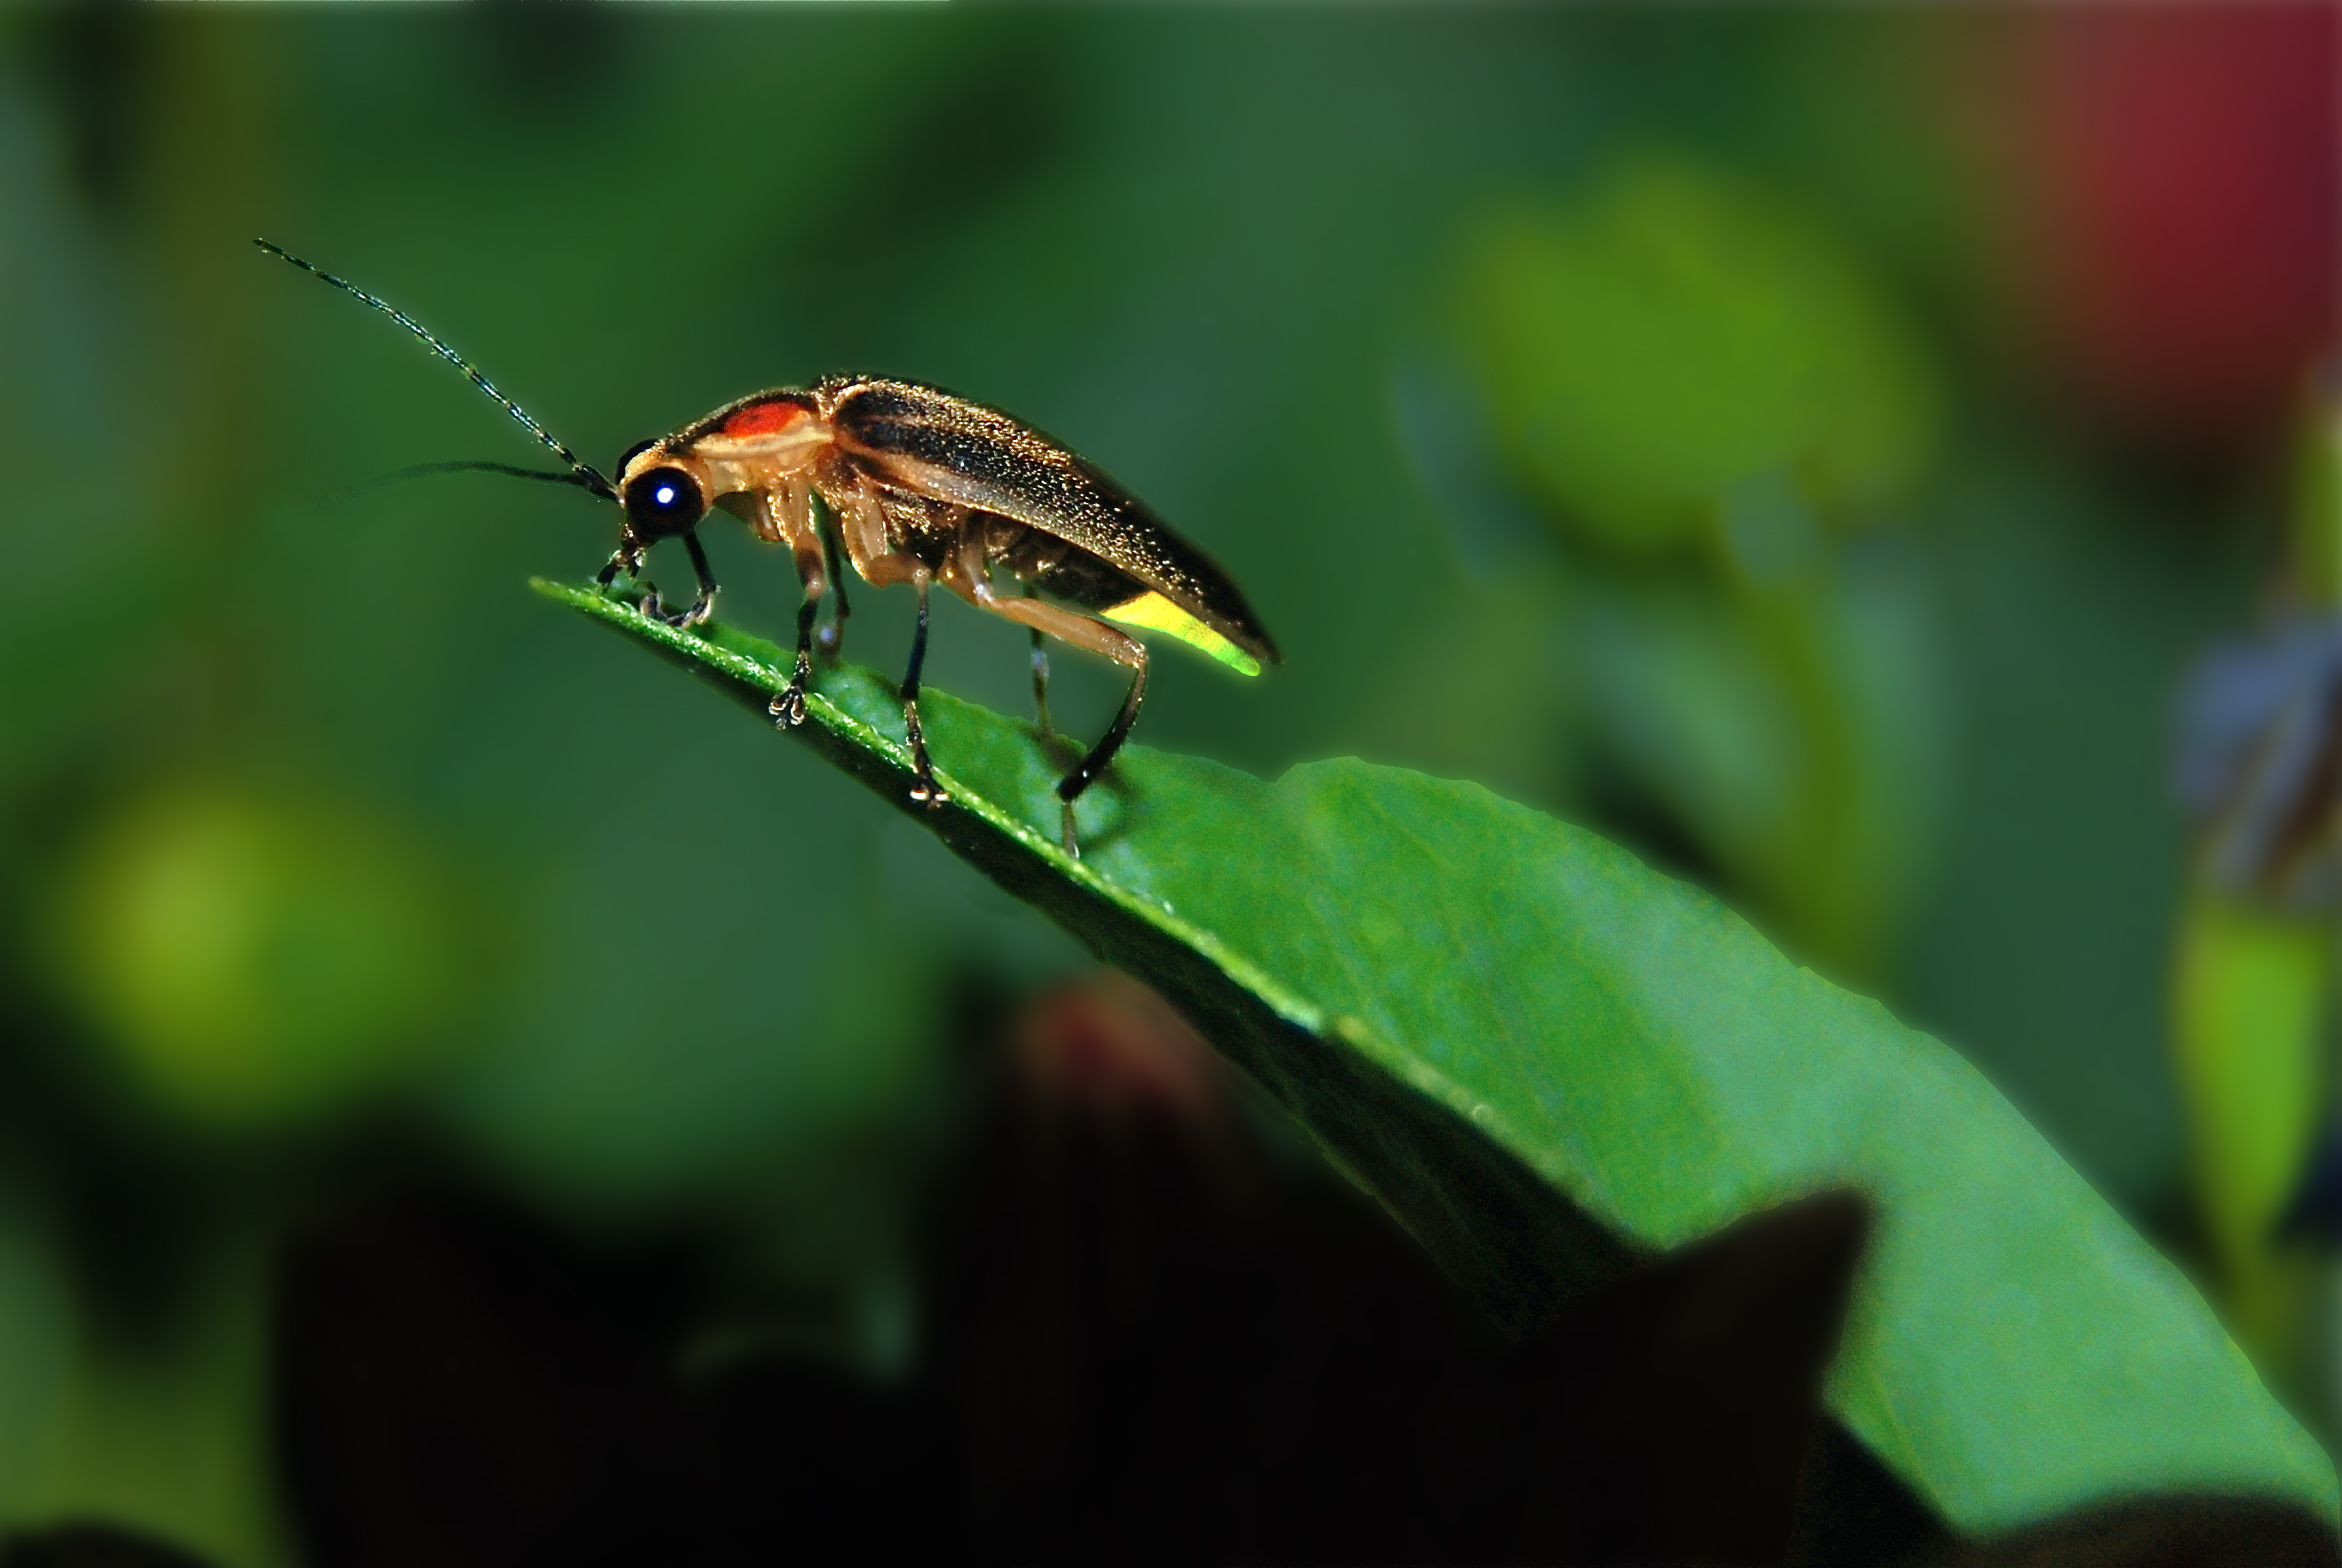 A firefly resting on a leaf.